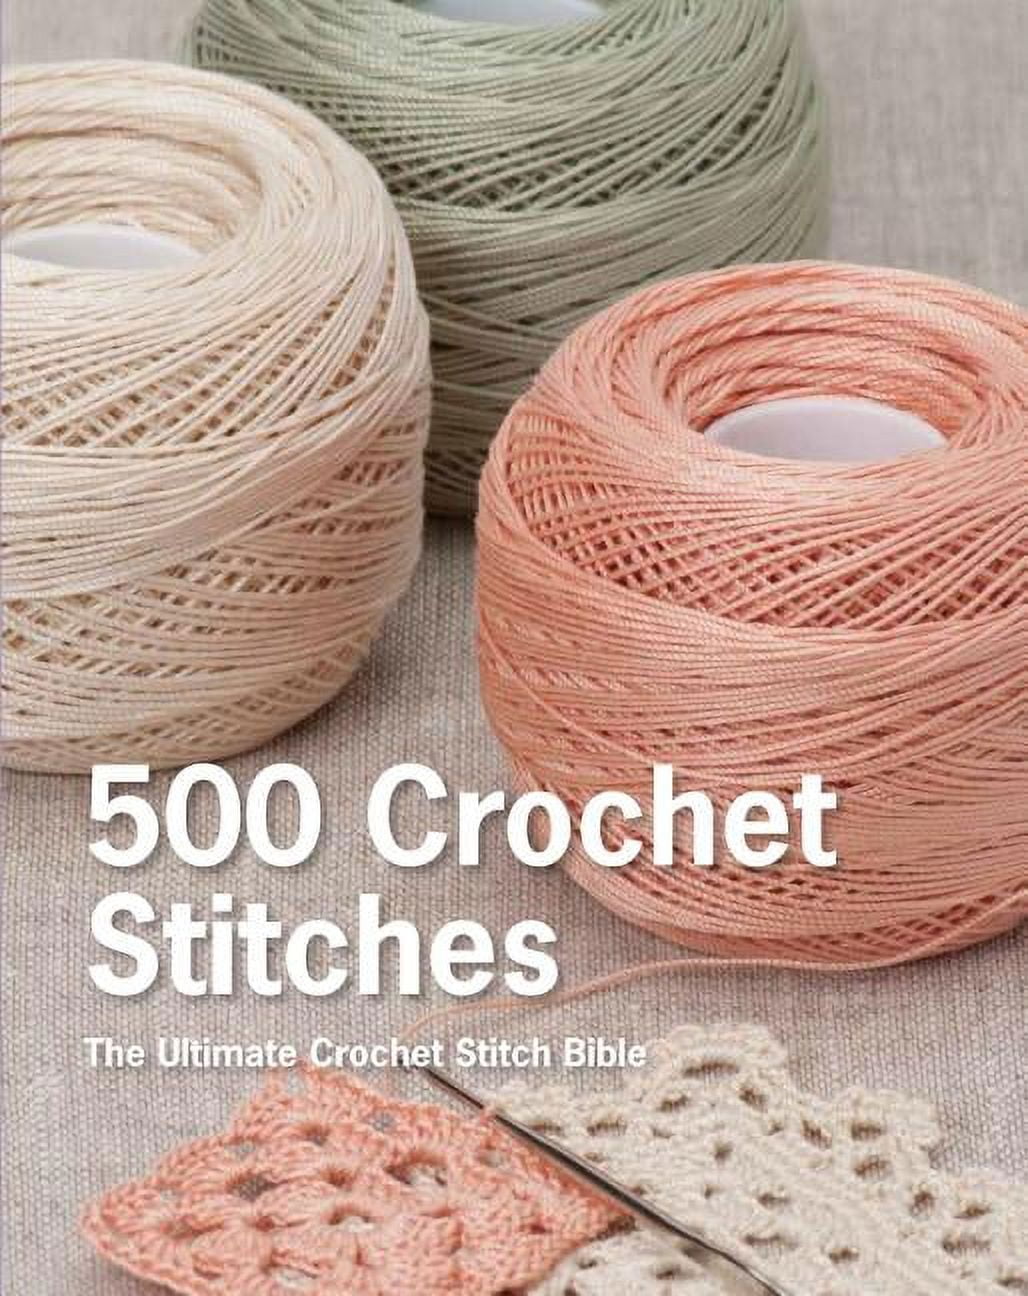 Leisure Arts Ultimate Crochet Collection Beginners Crochet Book